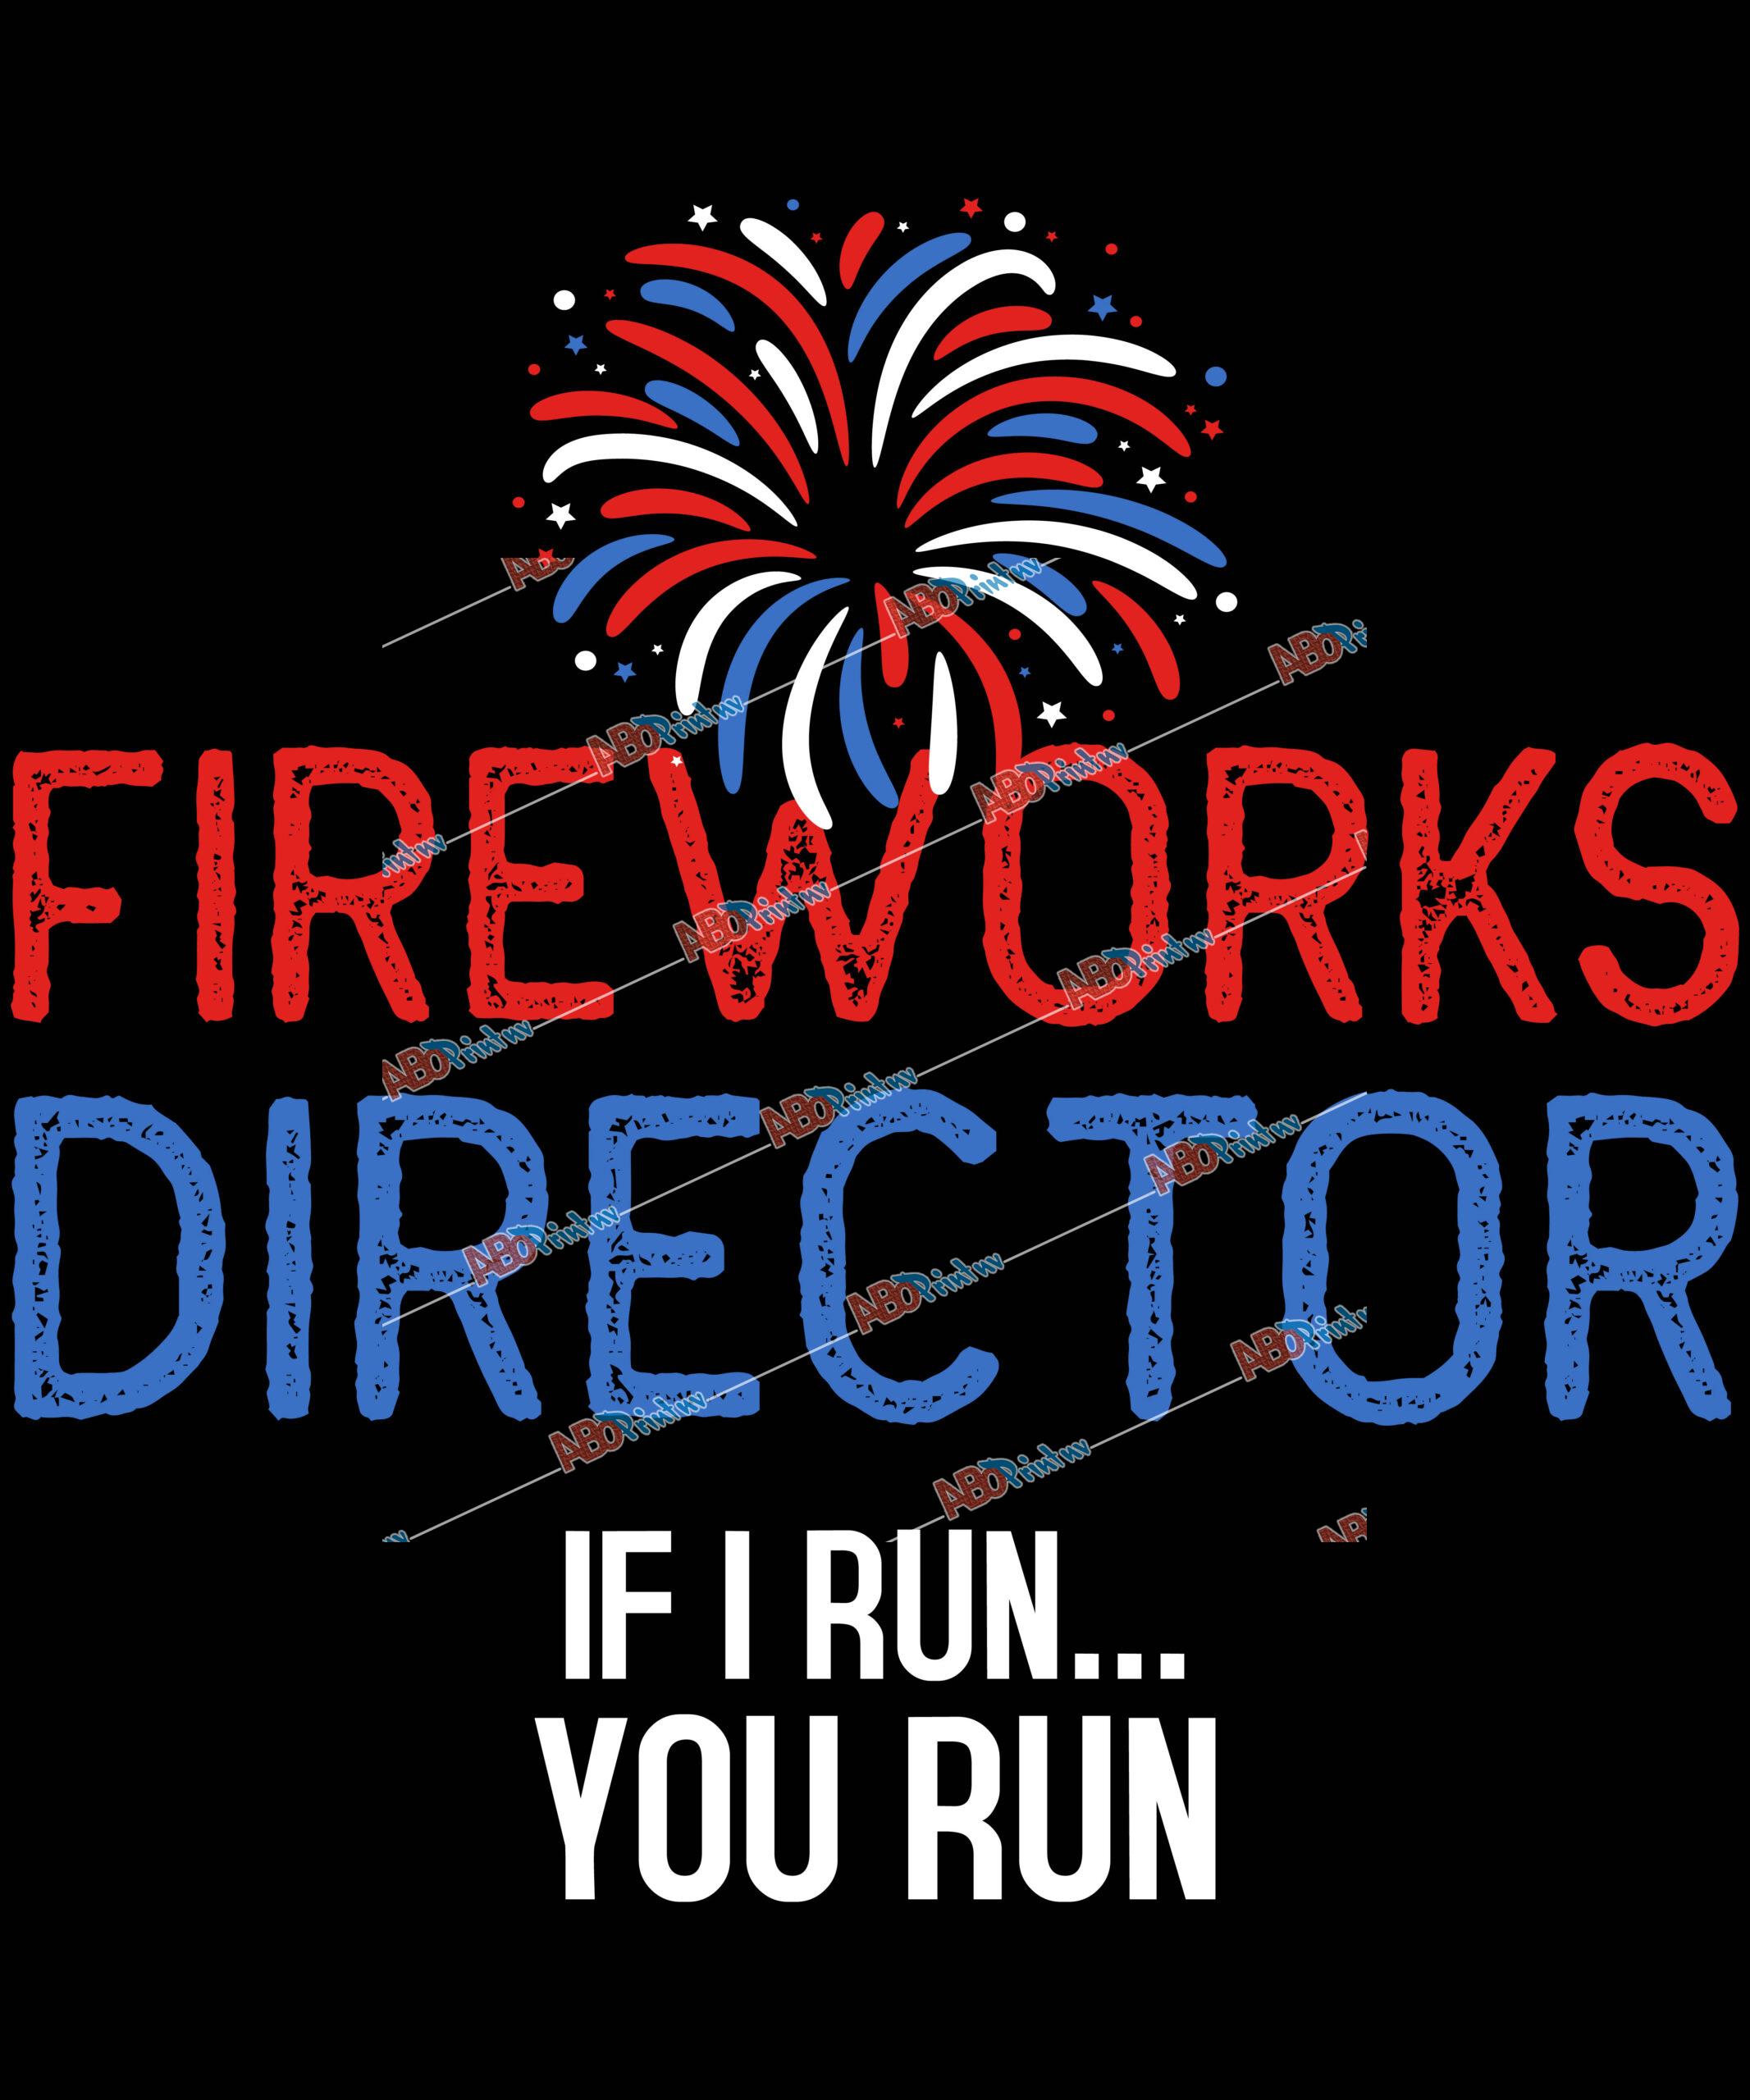 Fireworks Director If I Run You Run.jpg